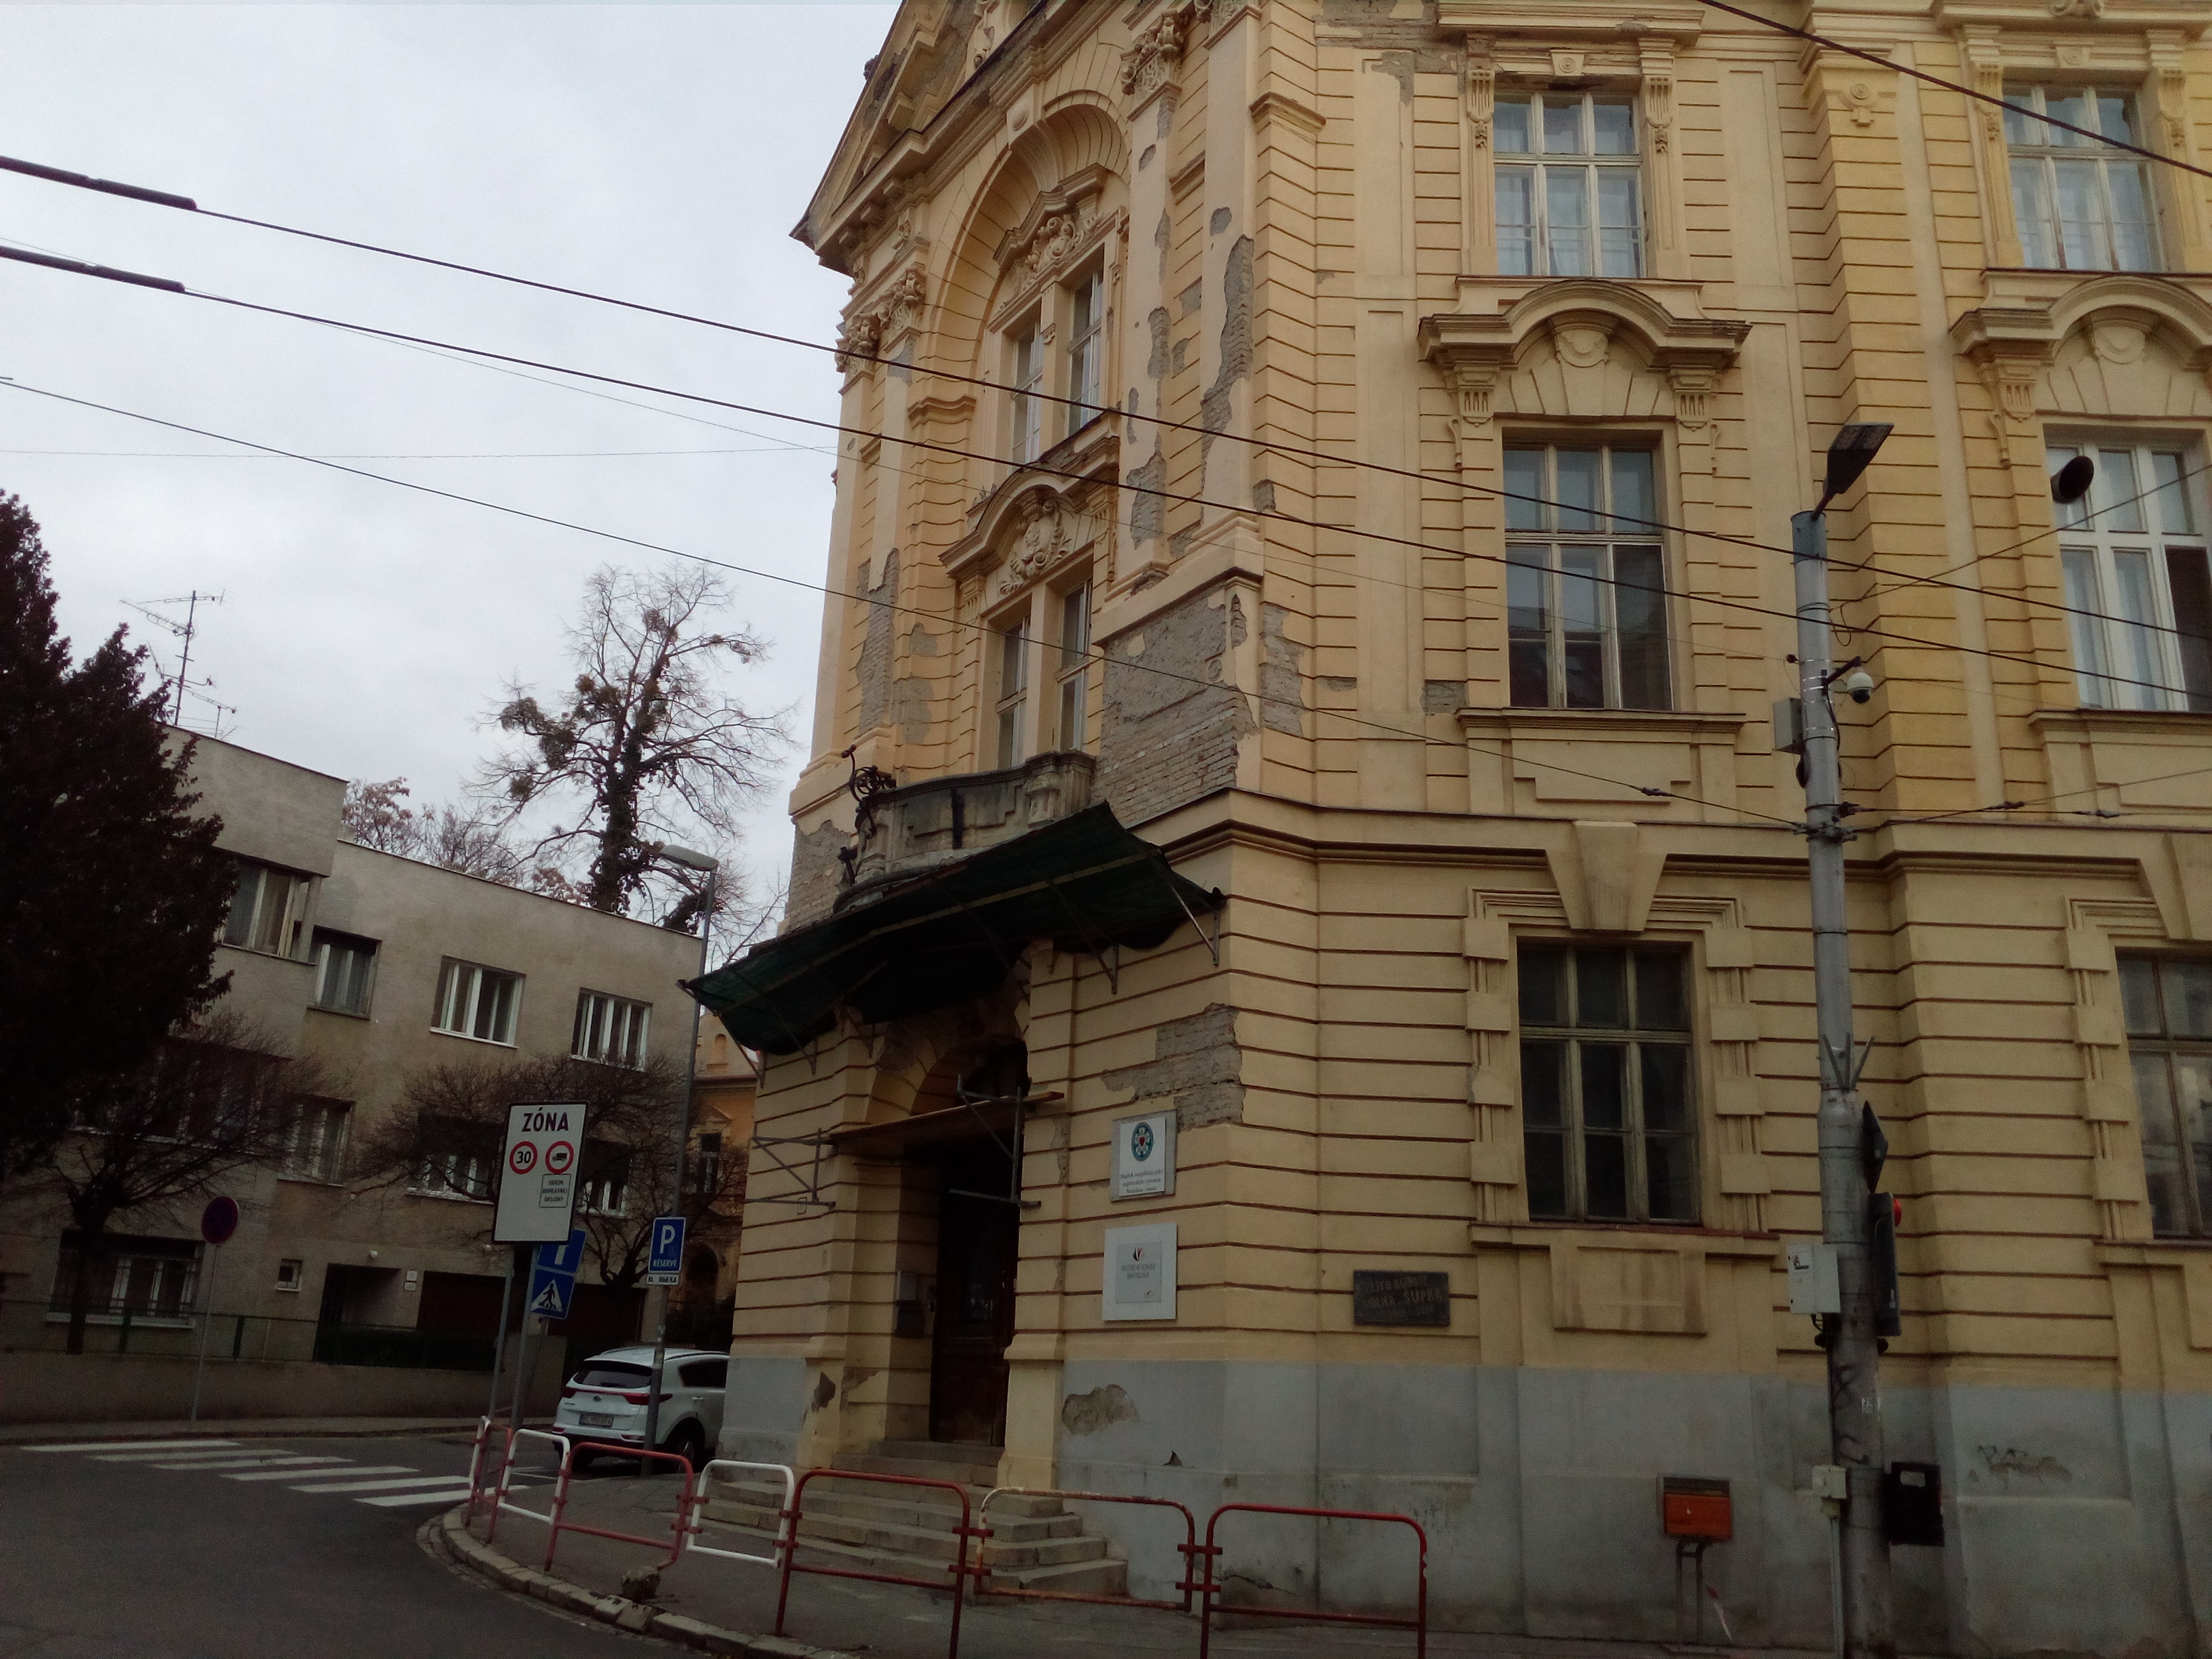 Palisády-stavby a budovy-zlý stav budovy, Staré Mesto, Bratislava |  Odkazprestarostu.sk